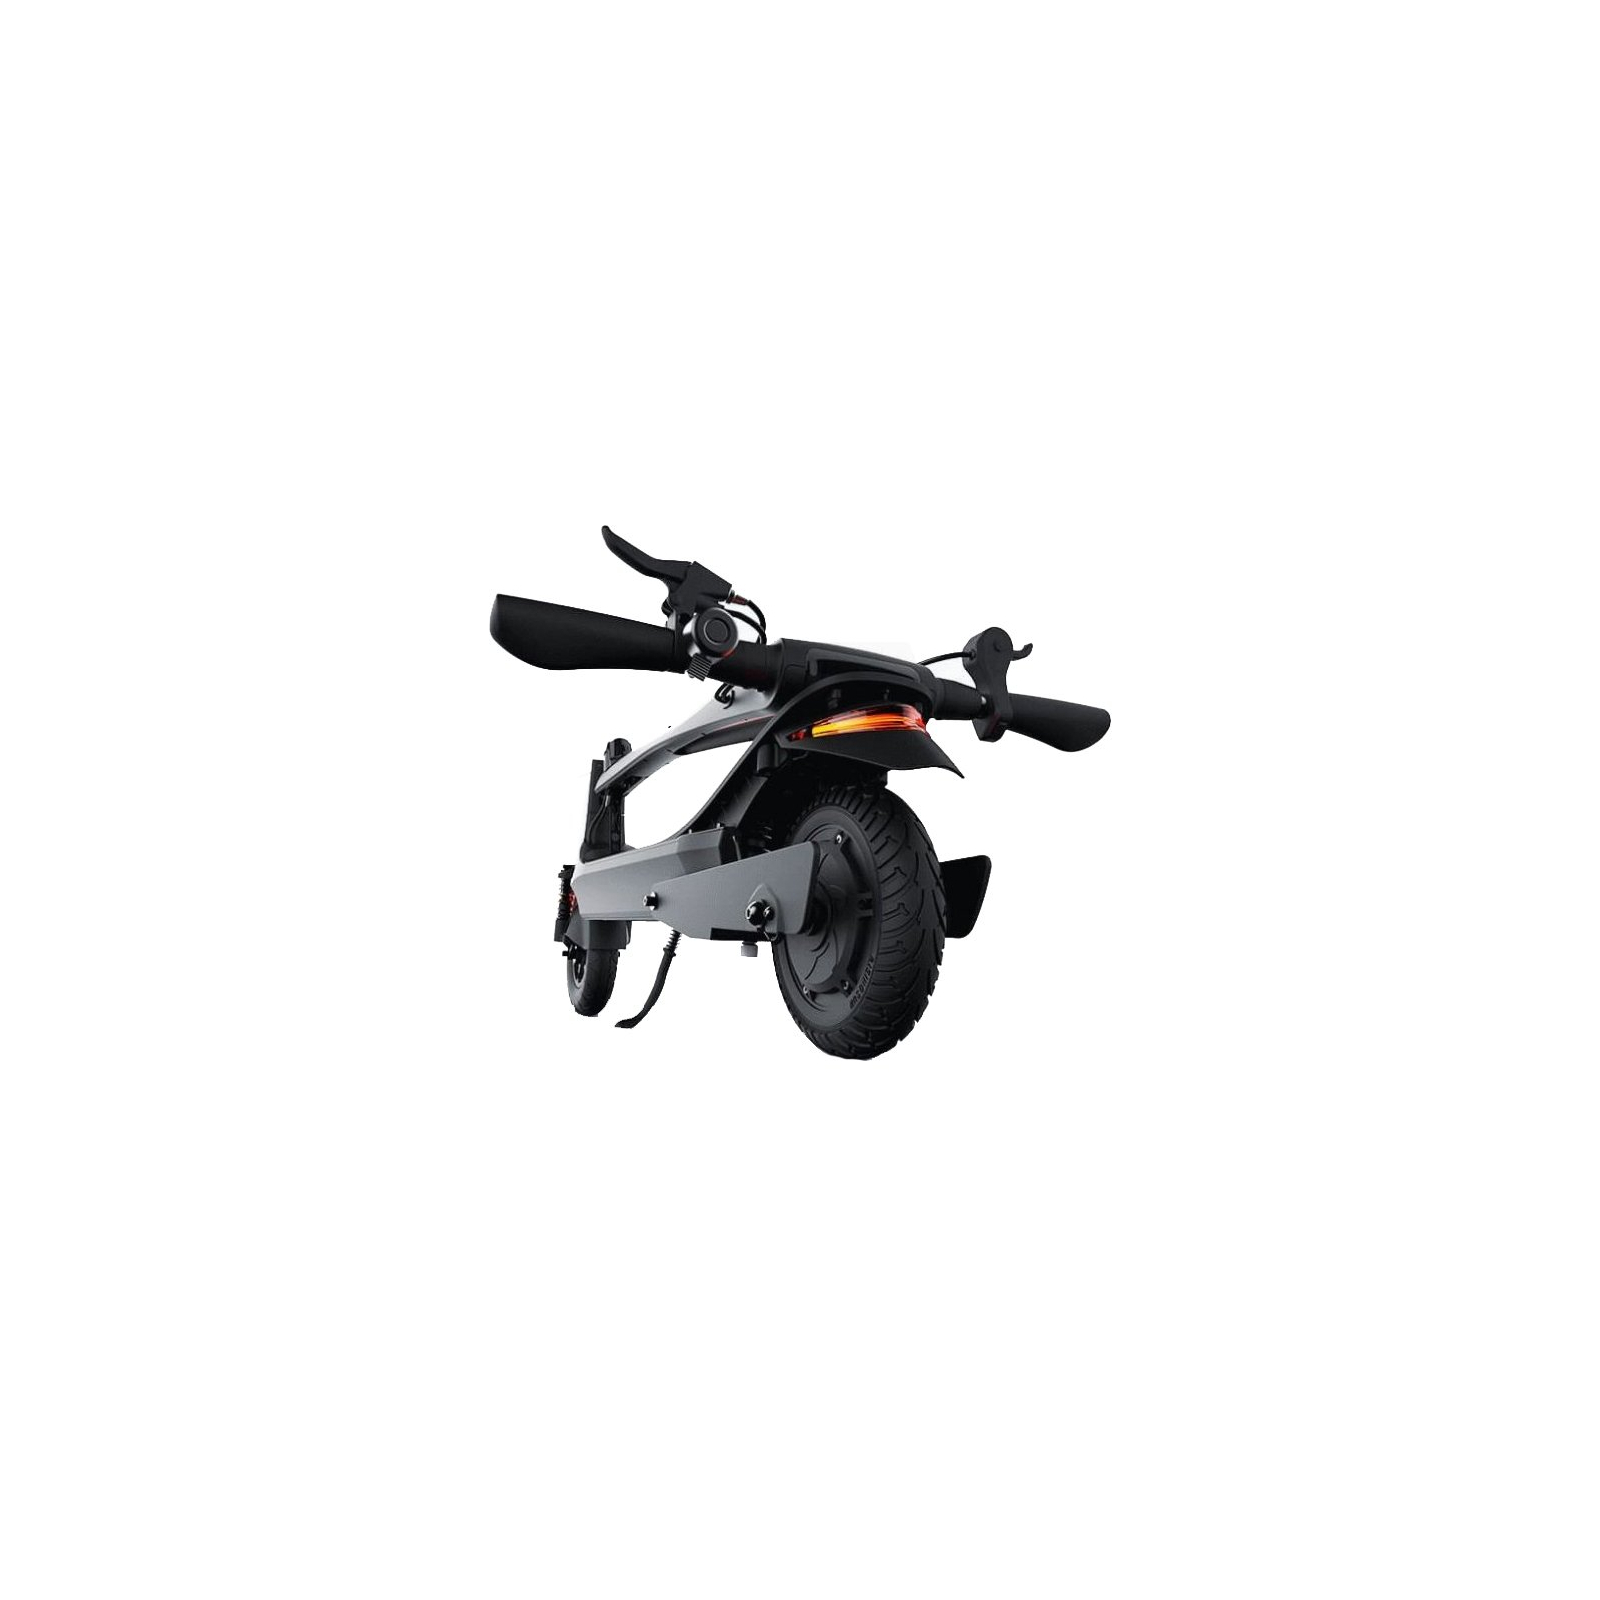 Электросамокат InMotion Lively E-Scooter Bike Black (IM-LVL-L6+) изображение 6